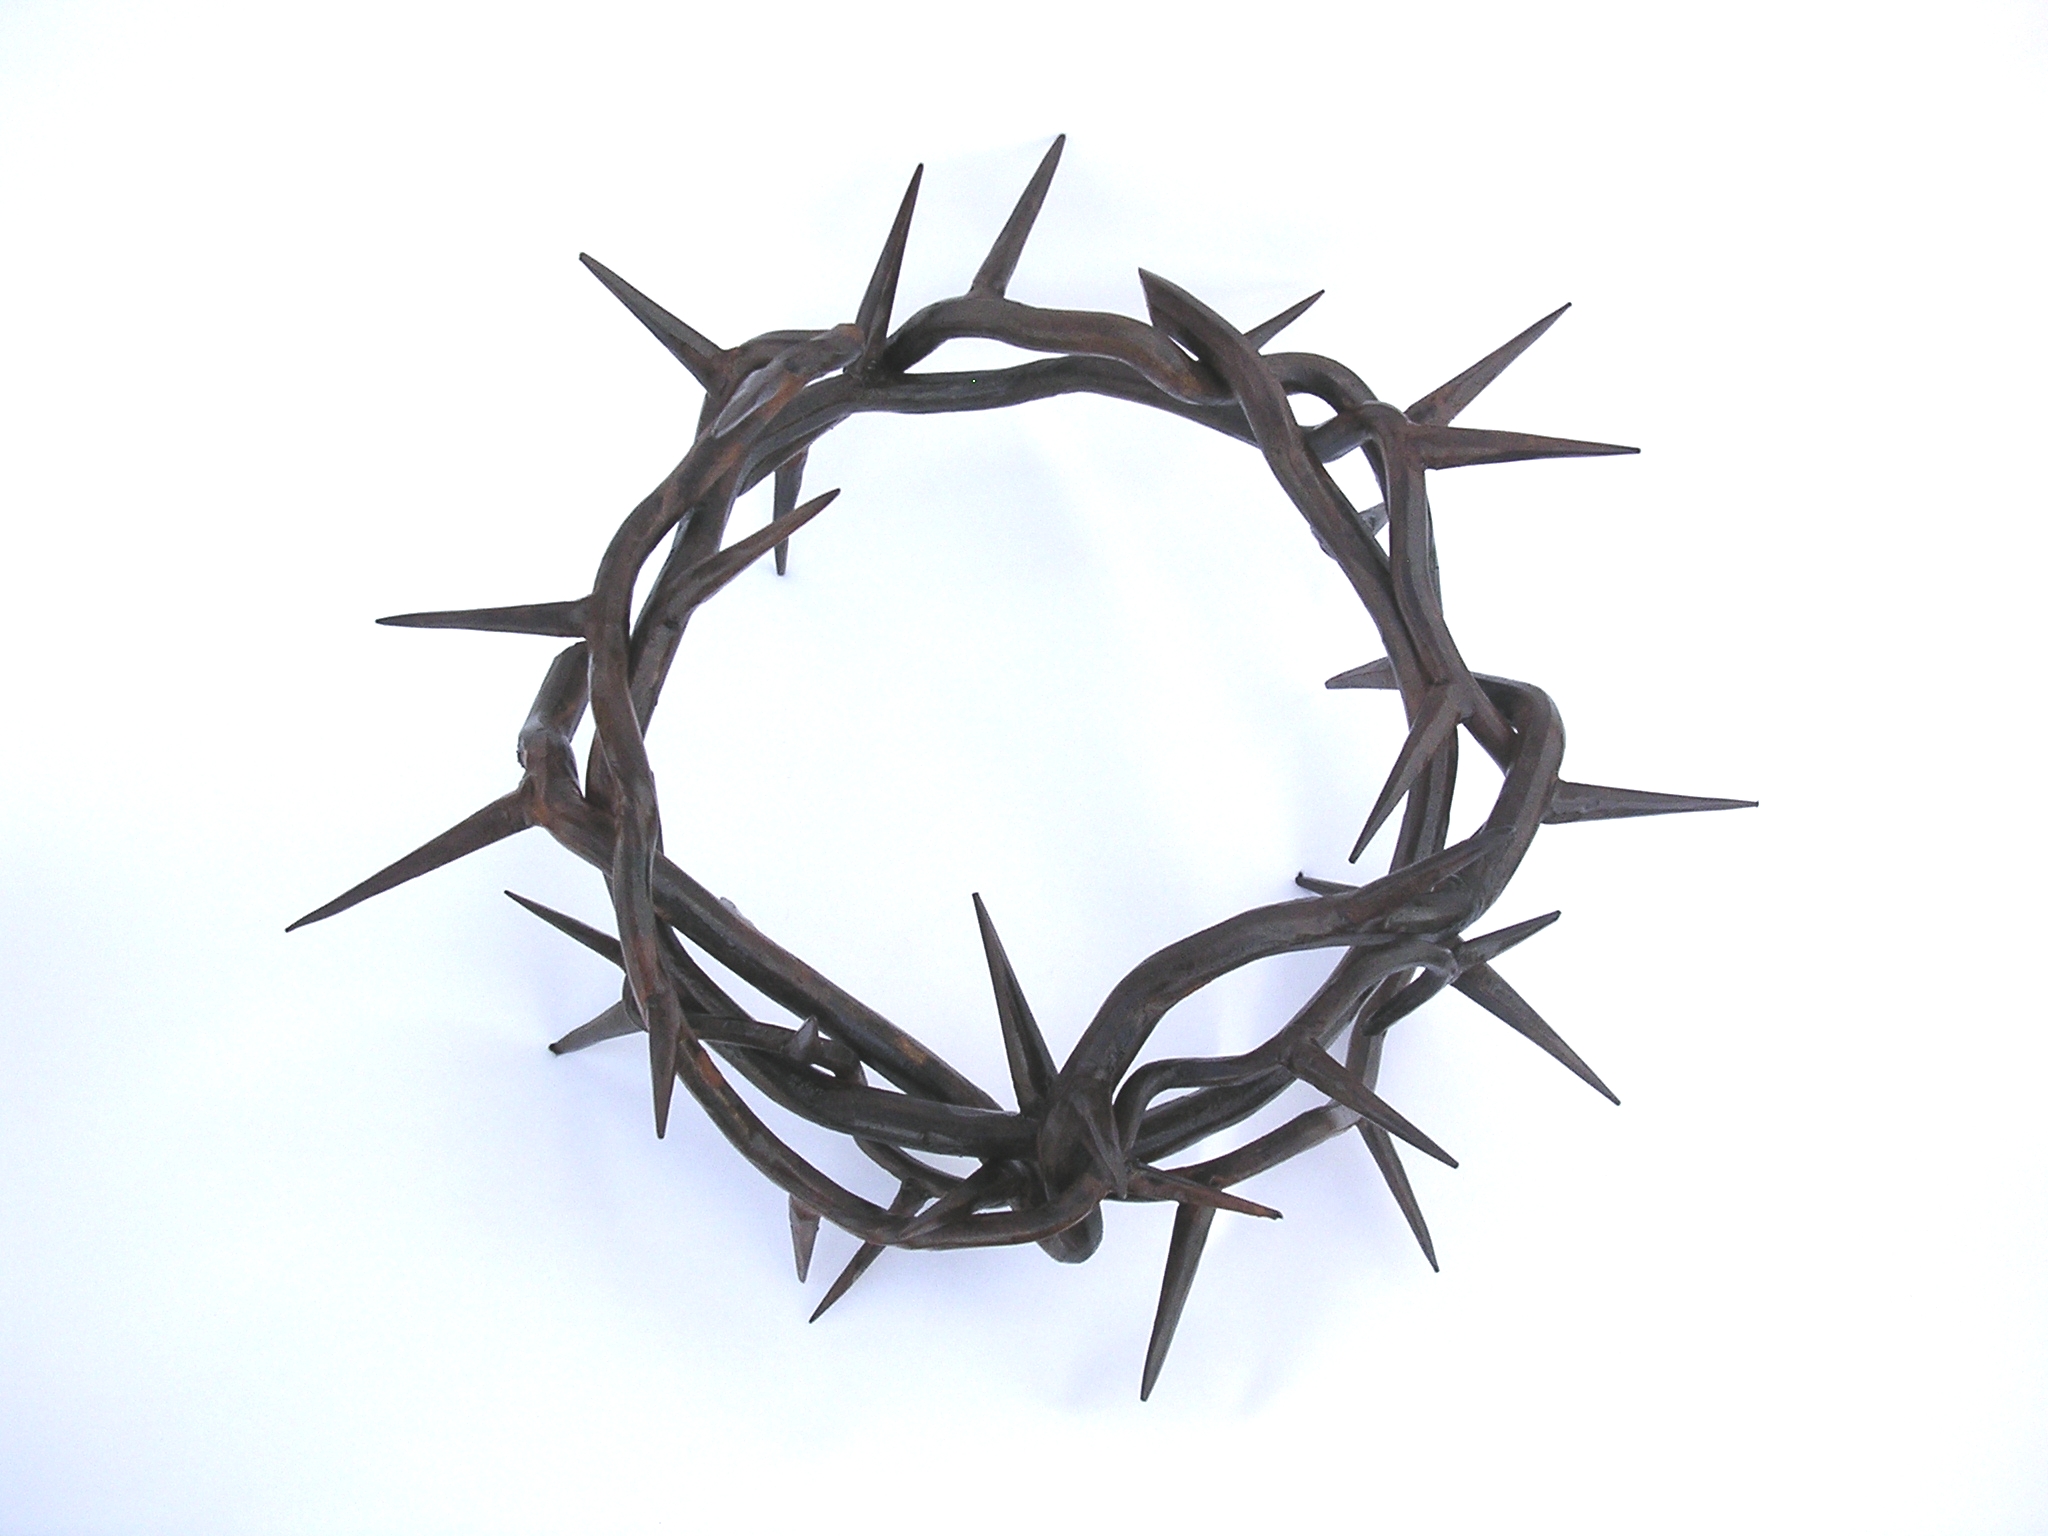 clipart jesus crown thorns - photo #42